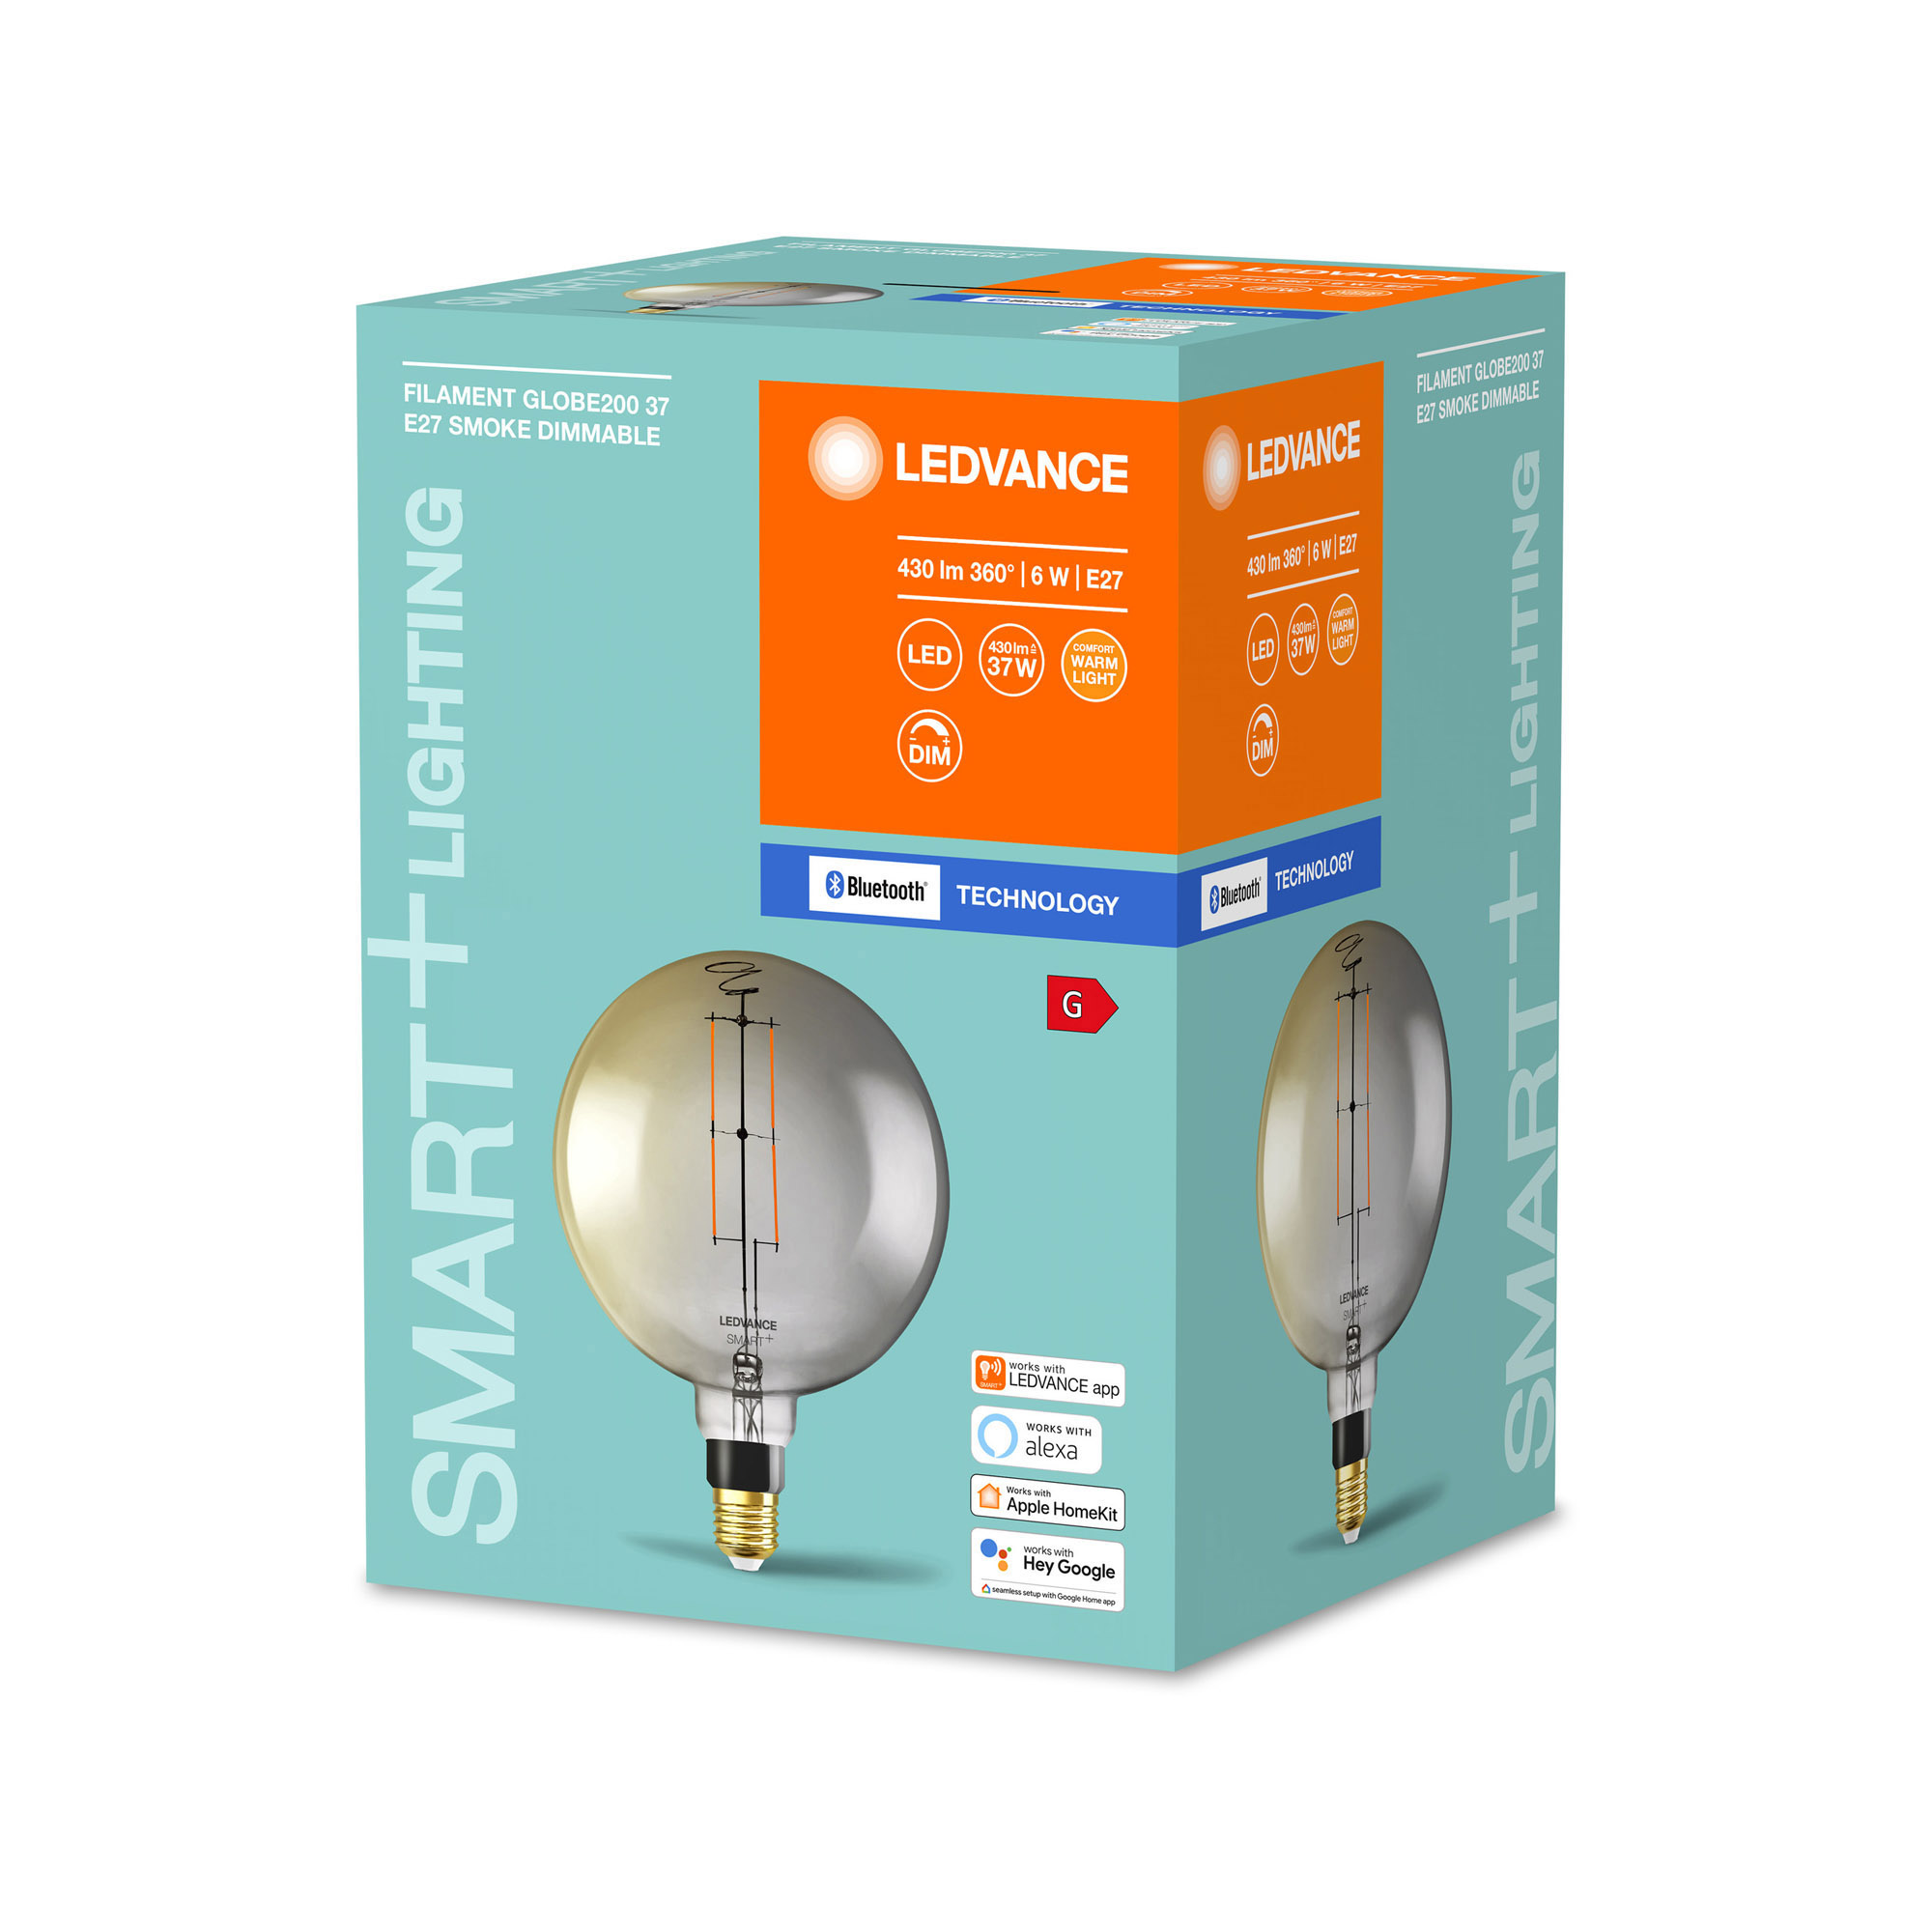 Bec LED LEDVANCE SMART+ Bluetooth Filament Globe200 37 6W E27 Smoke DIM 430lm